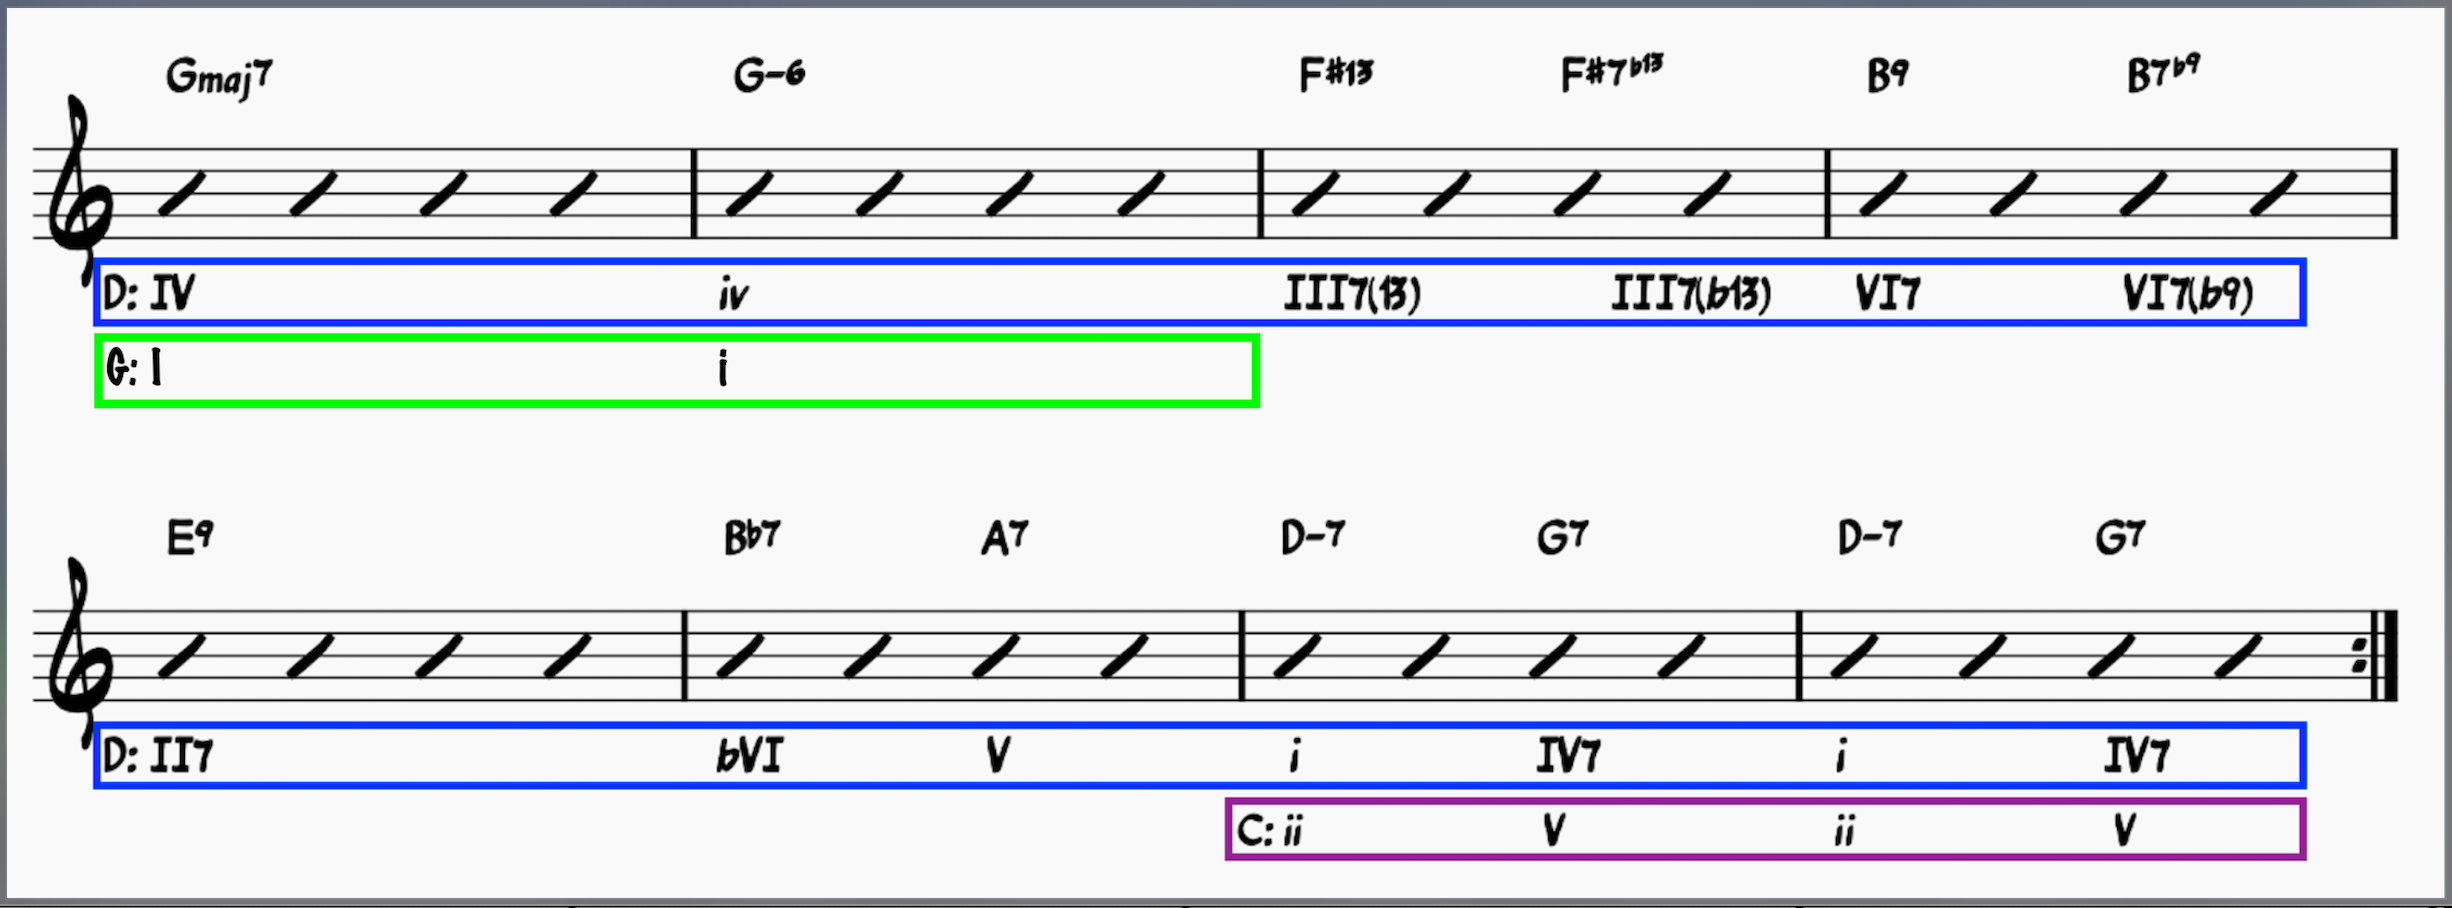 Bossa Nova Chord Progressions: [III - VI - II - V] in the A section of Wave